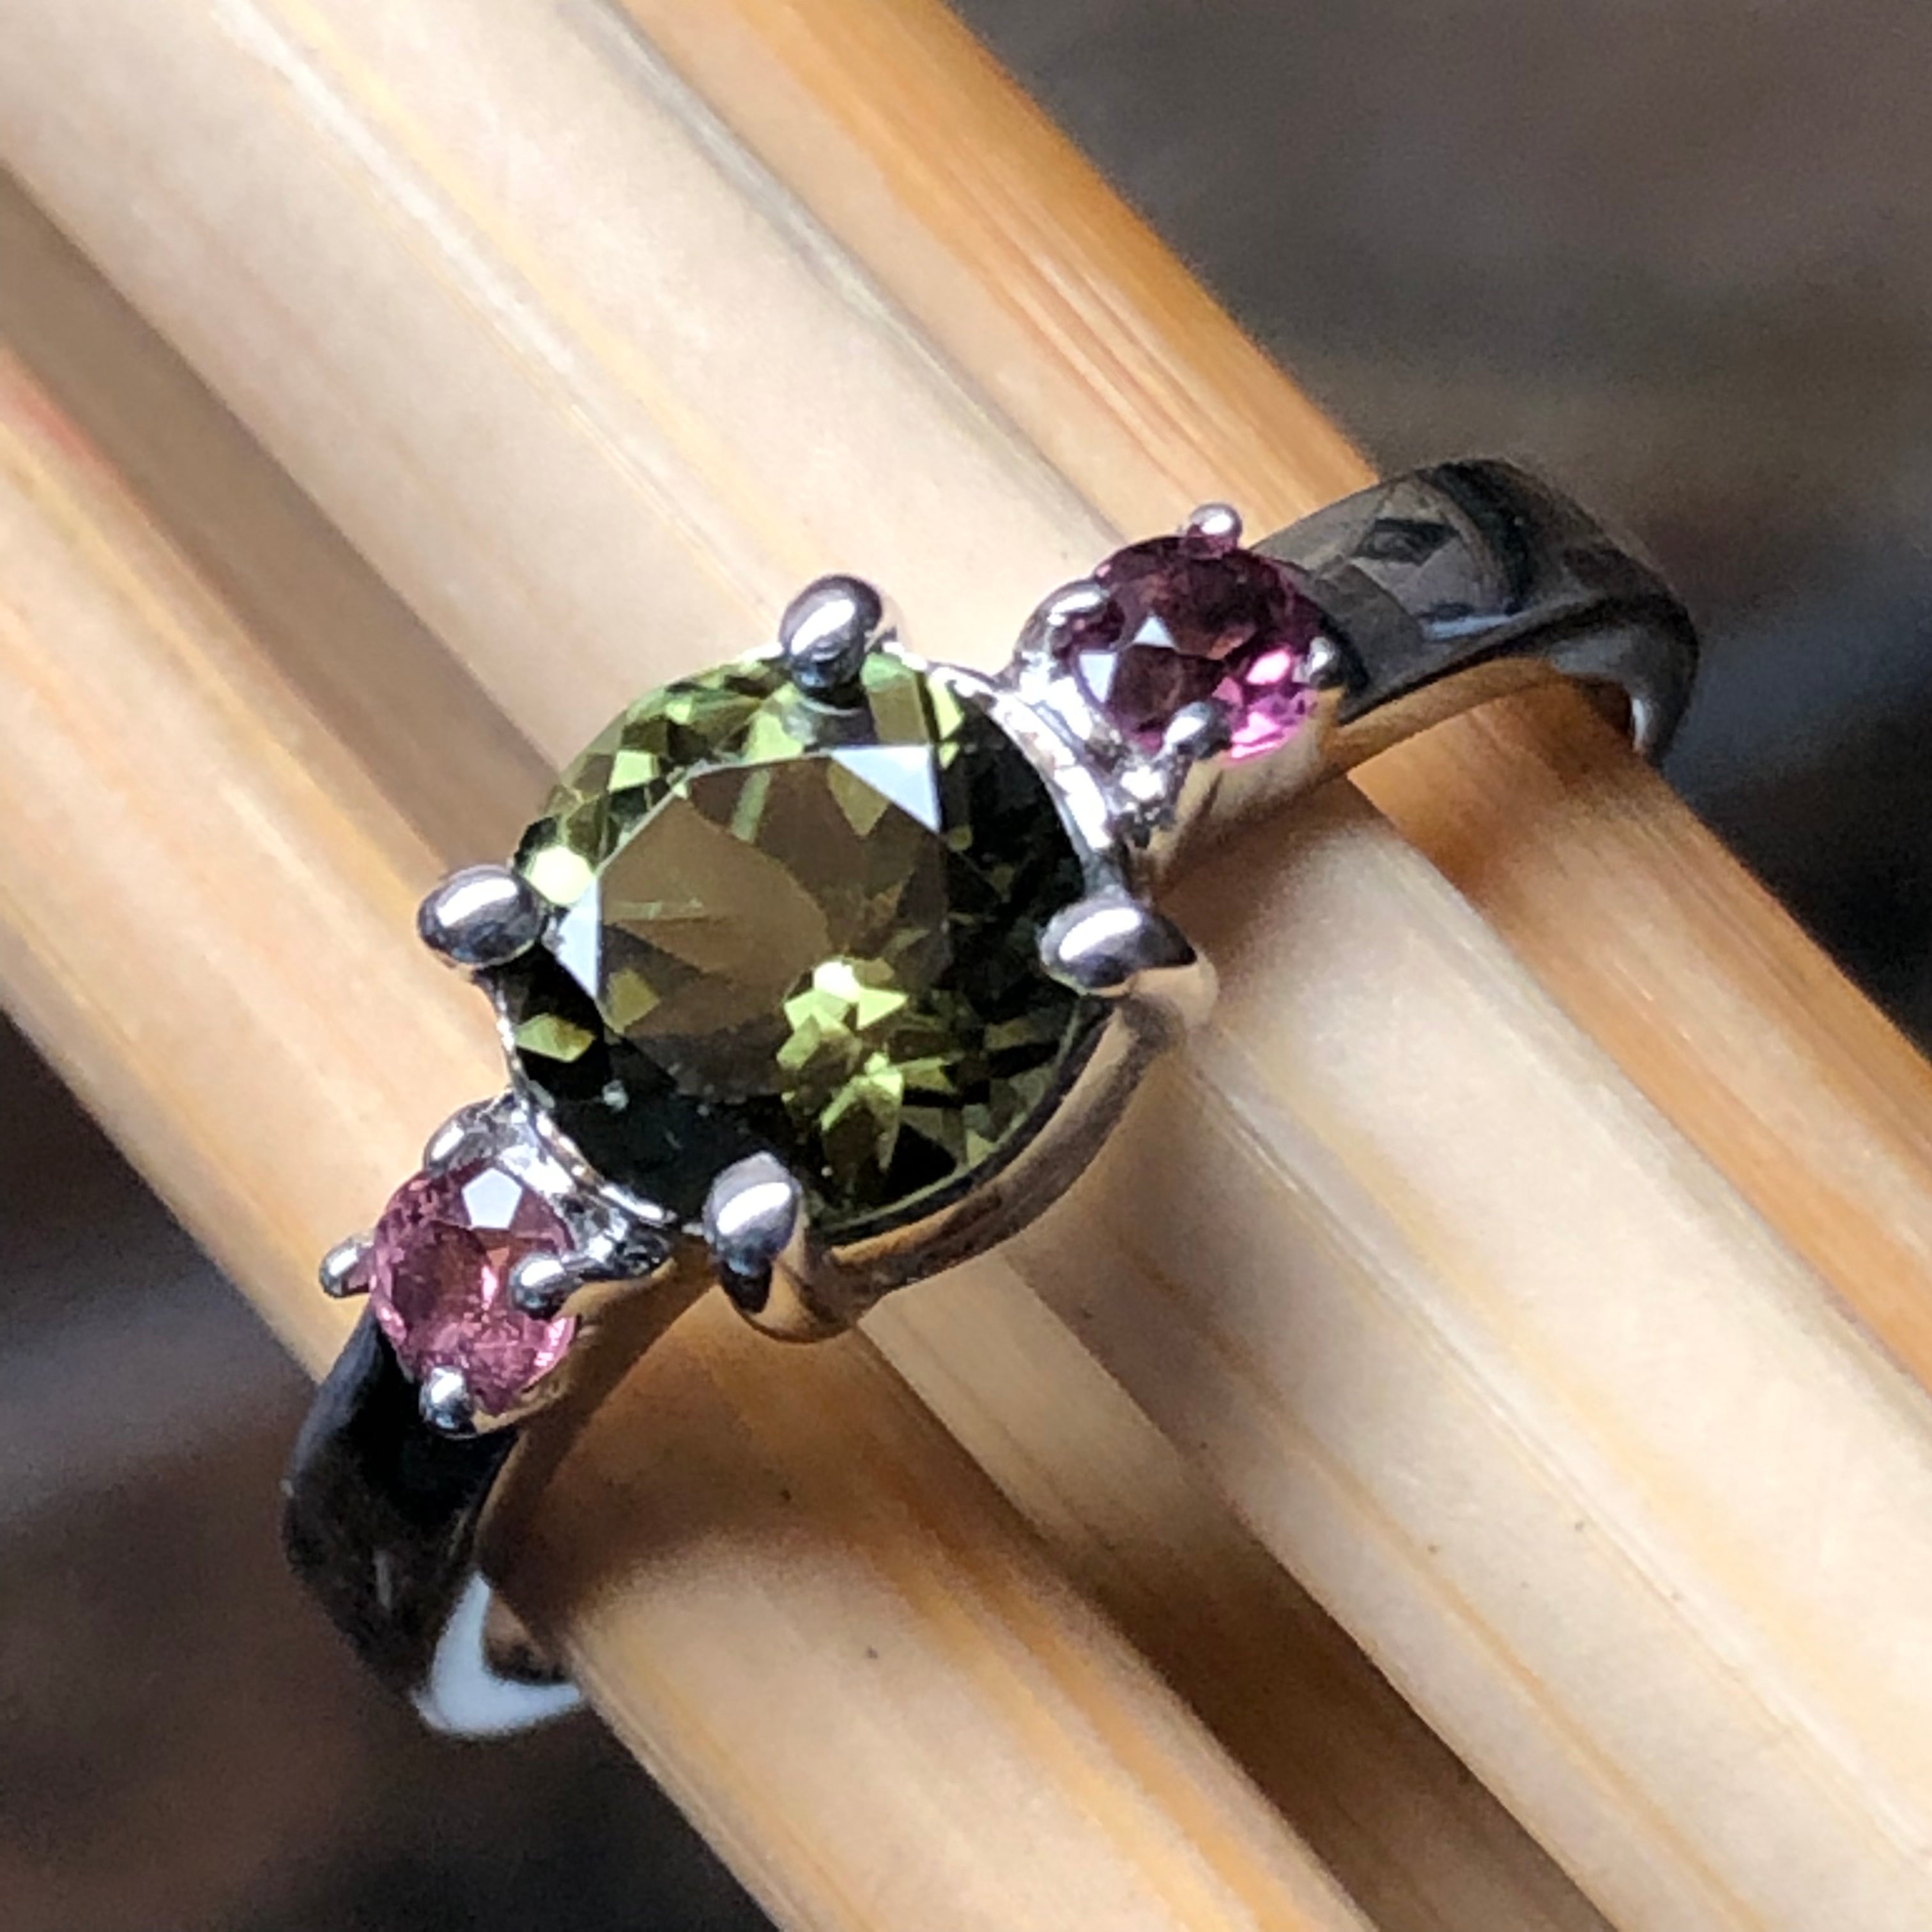 Natural Green Tourmaline, Pink tourmaline 925 Solid Sterling Silver Engagement Ring Size 4.25, 5, 6, 7, 8, 9 - Natural Rocks by Kala